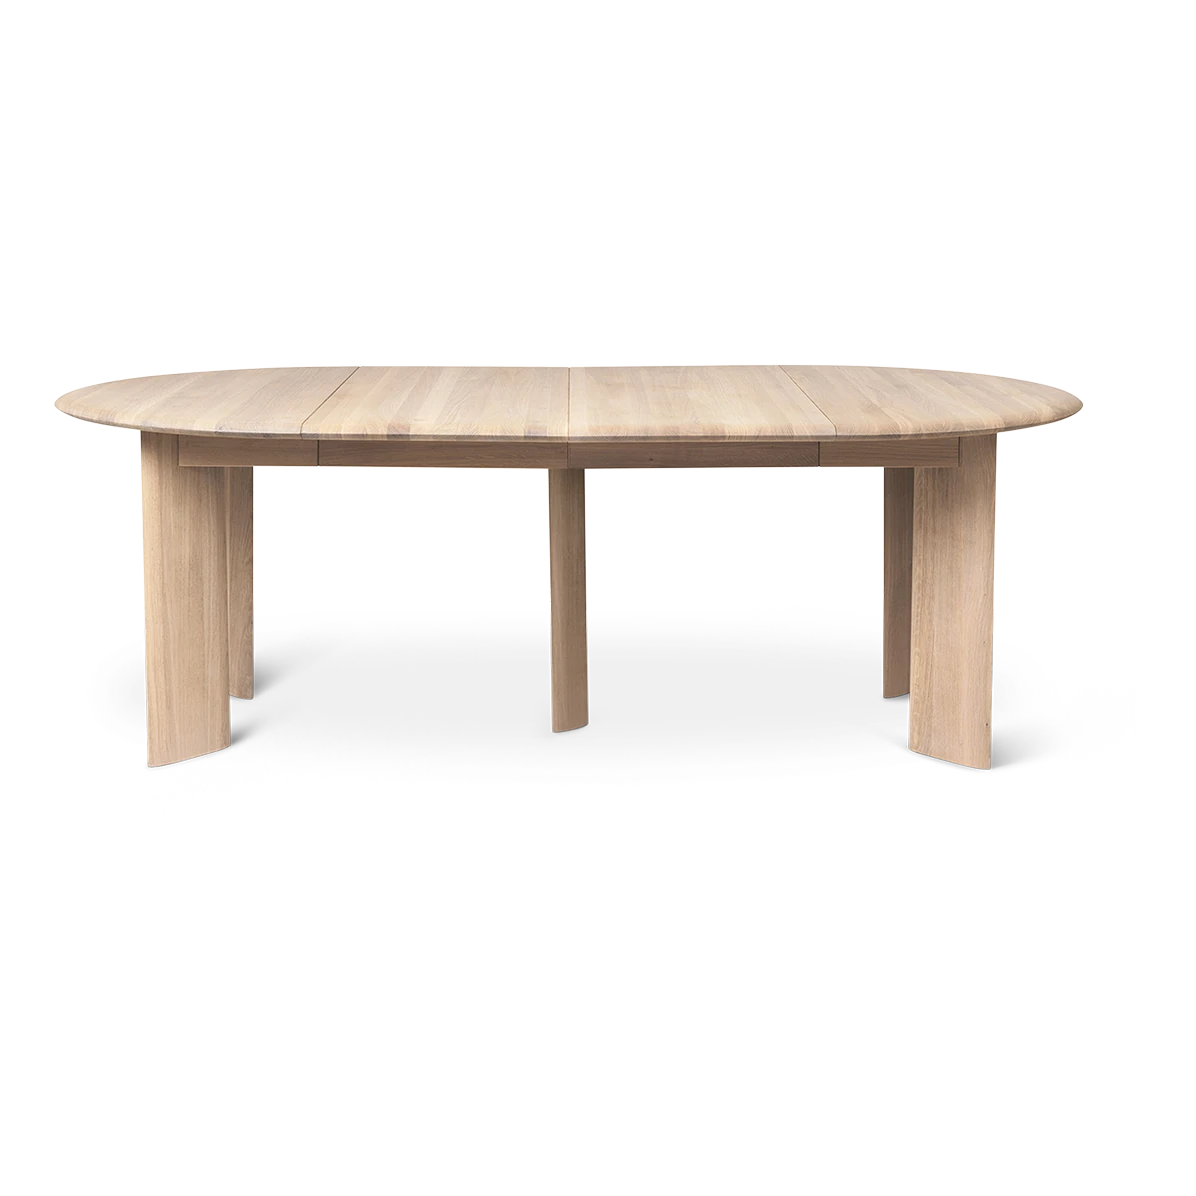 Bevel table extendable x 2 - White oiled oak by ferm Living - Lifestory